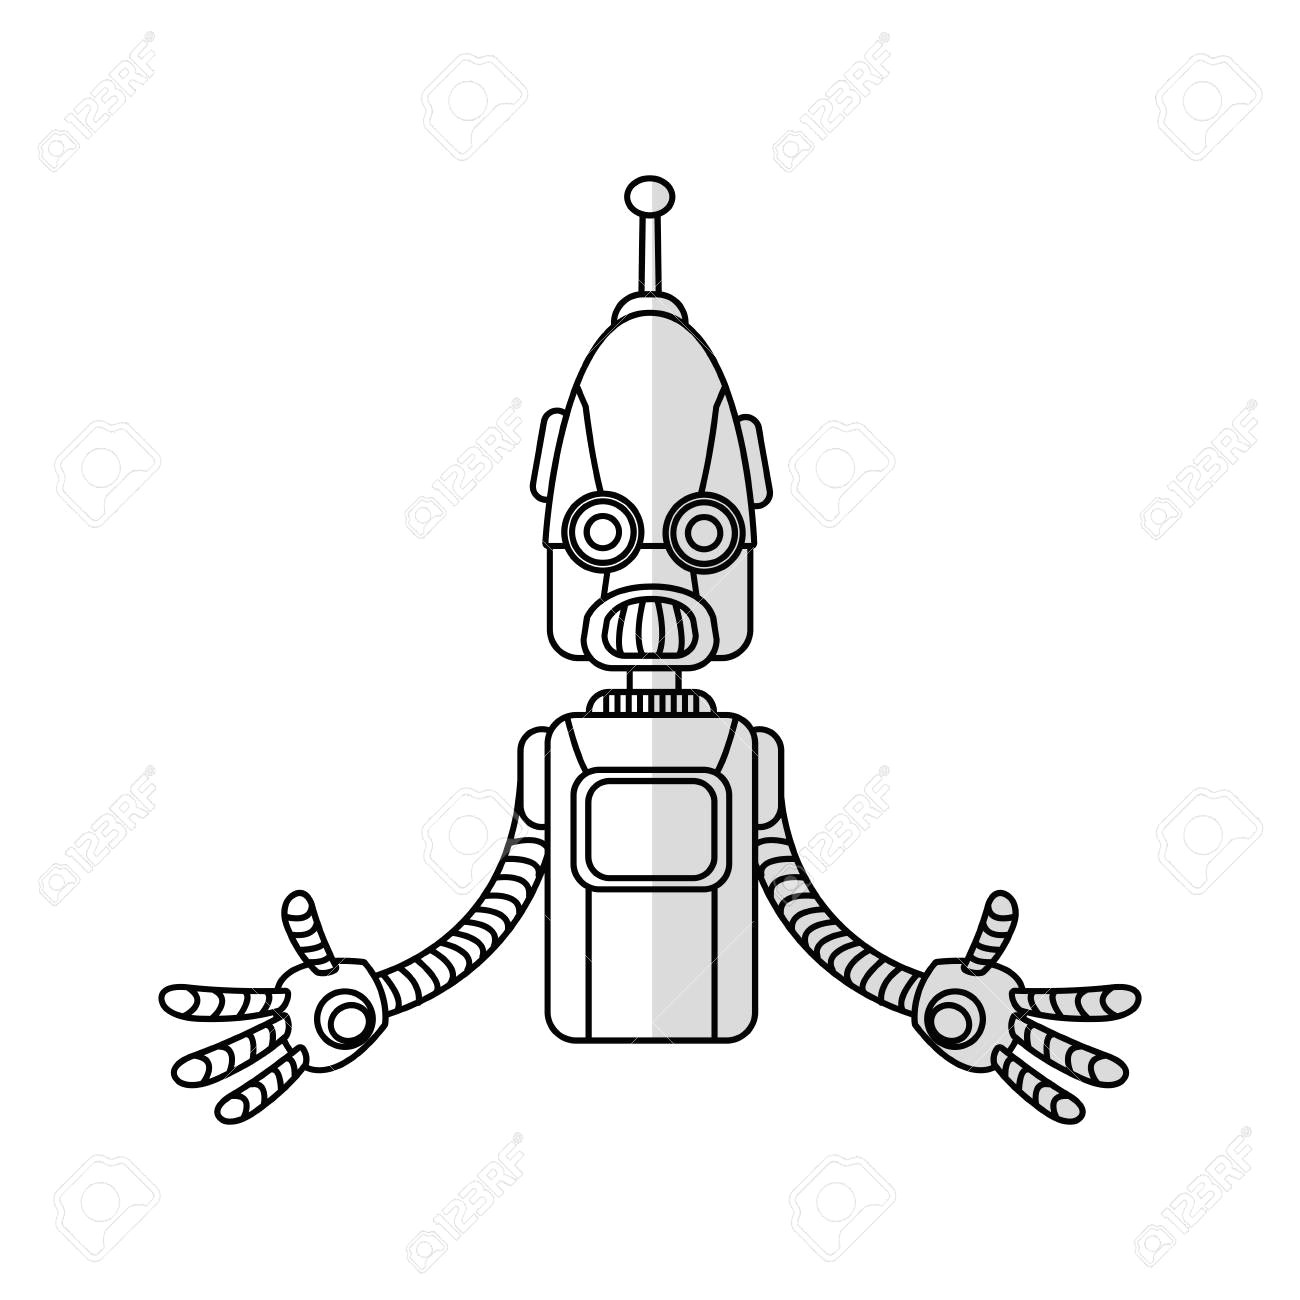 robot cartoon icon over white background vector illustration stock vector 72815431